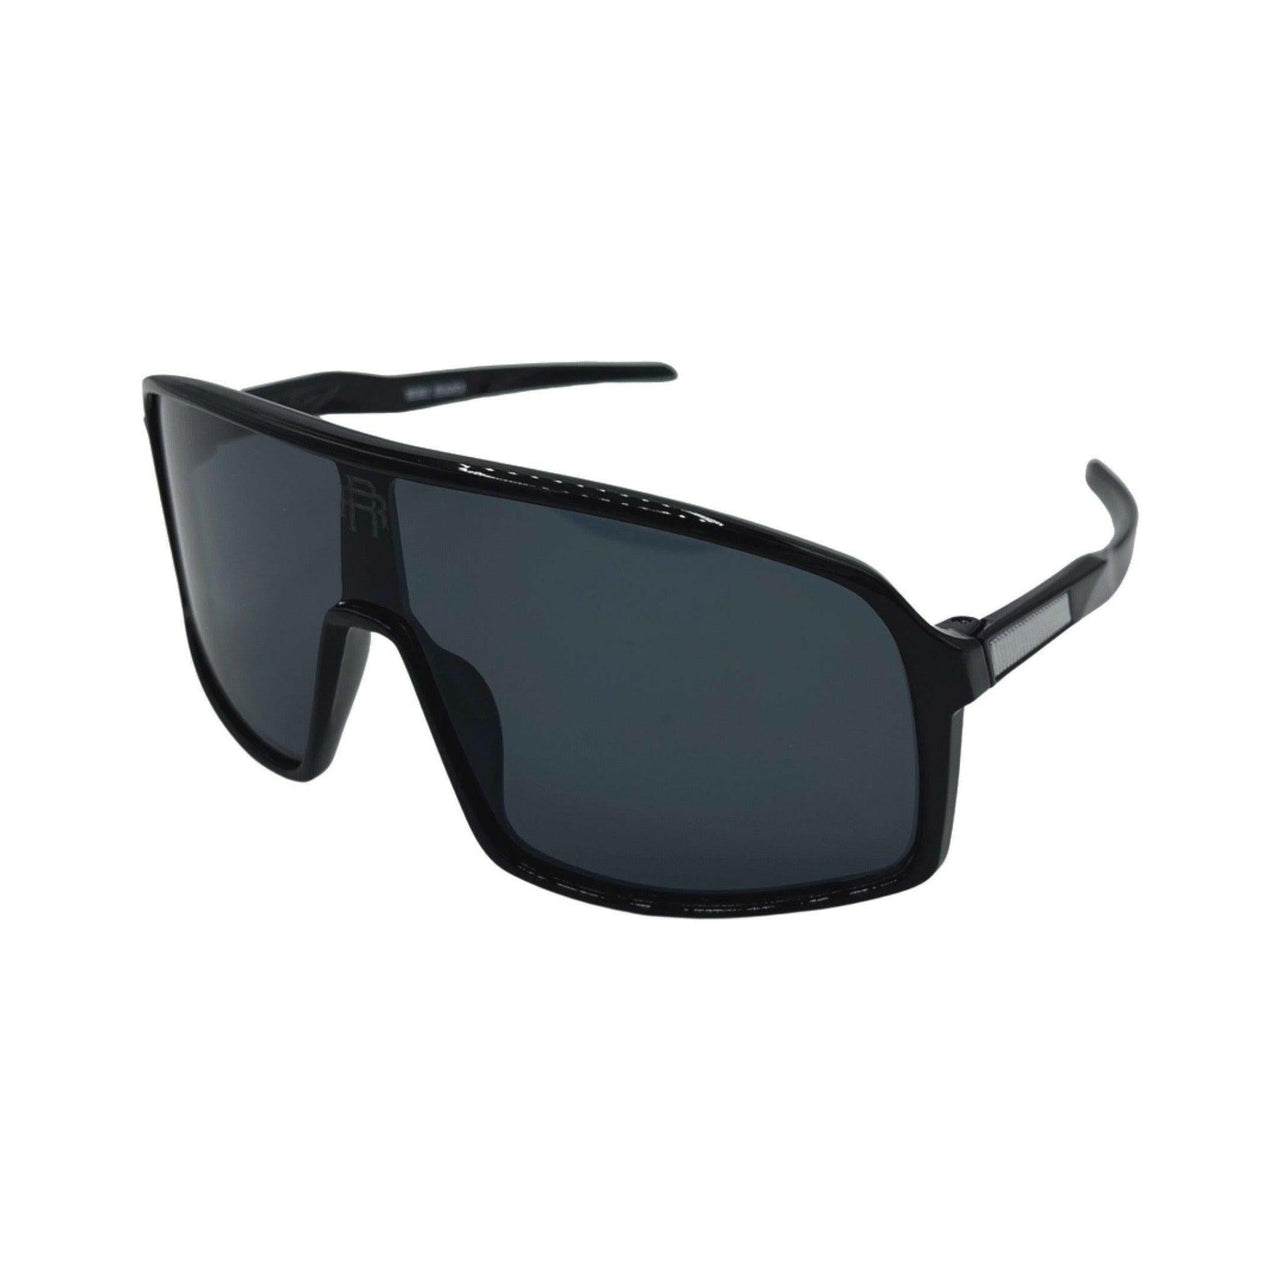 Yeti Gloss Black Polarized Lens Sunglasses - Rebel Reaper Clothing CompanySunglasses